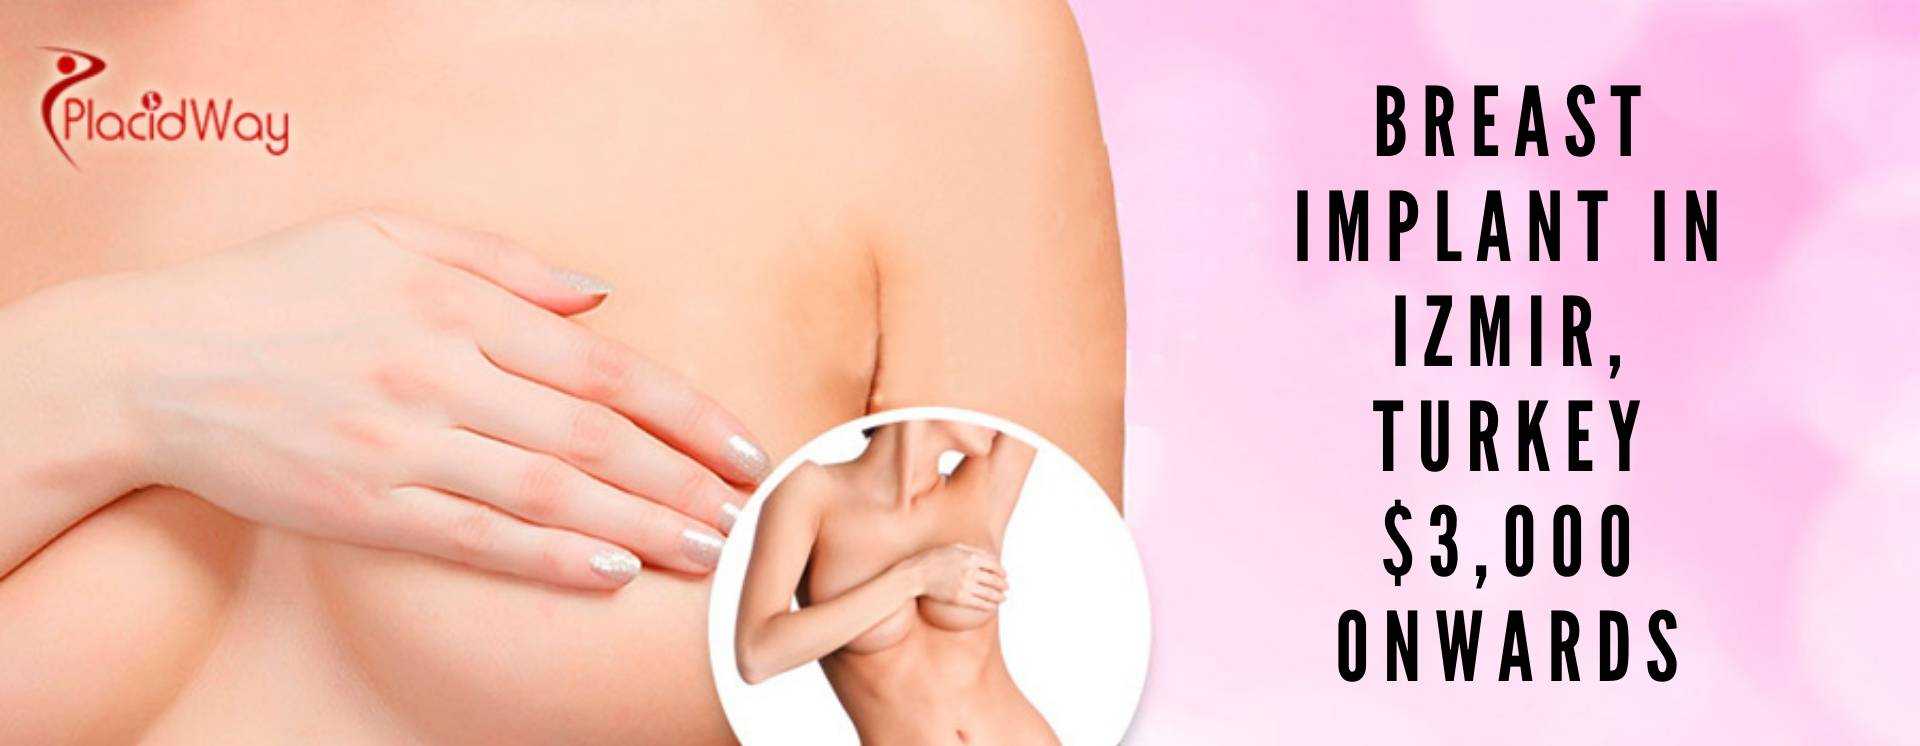 Breast Implant in Izmir. Turkey